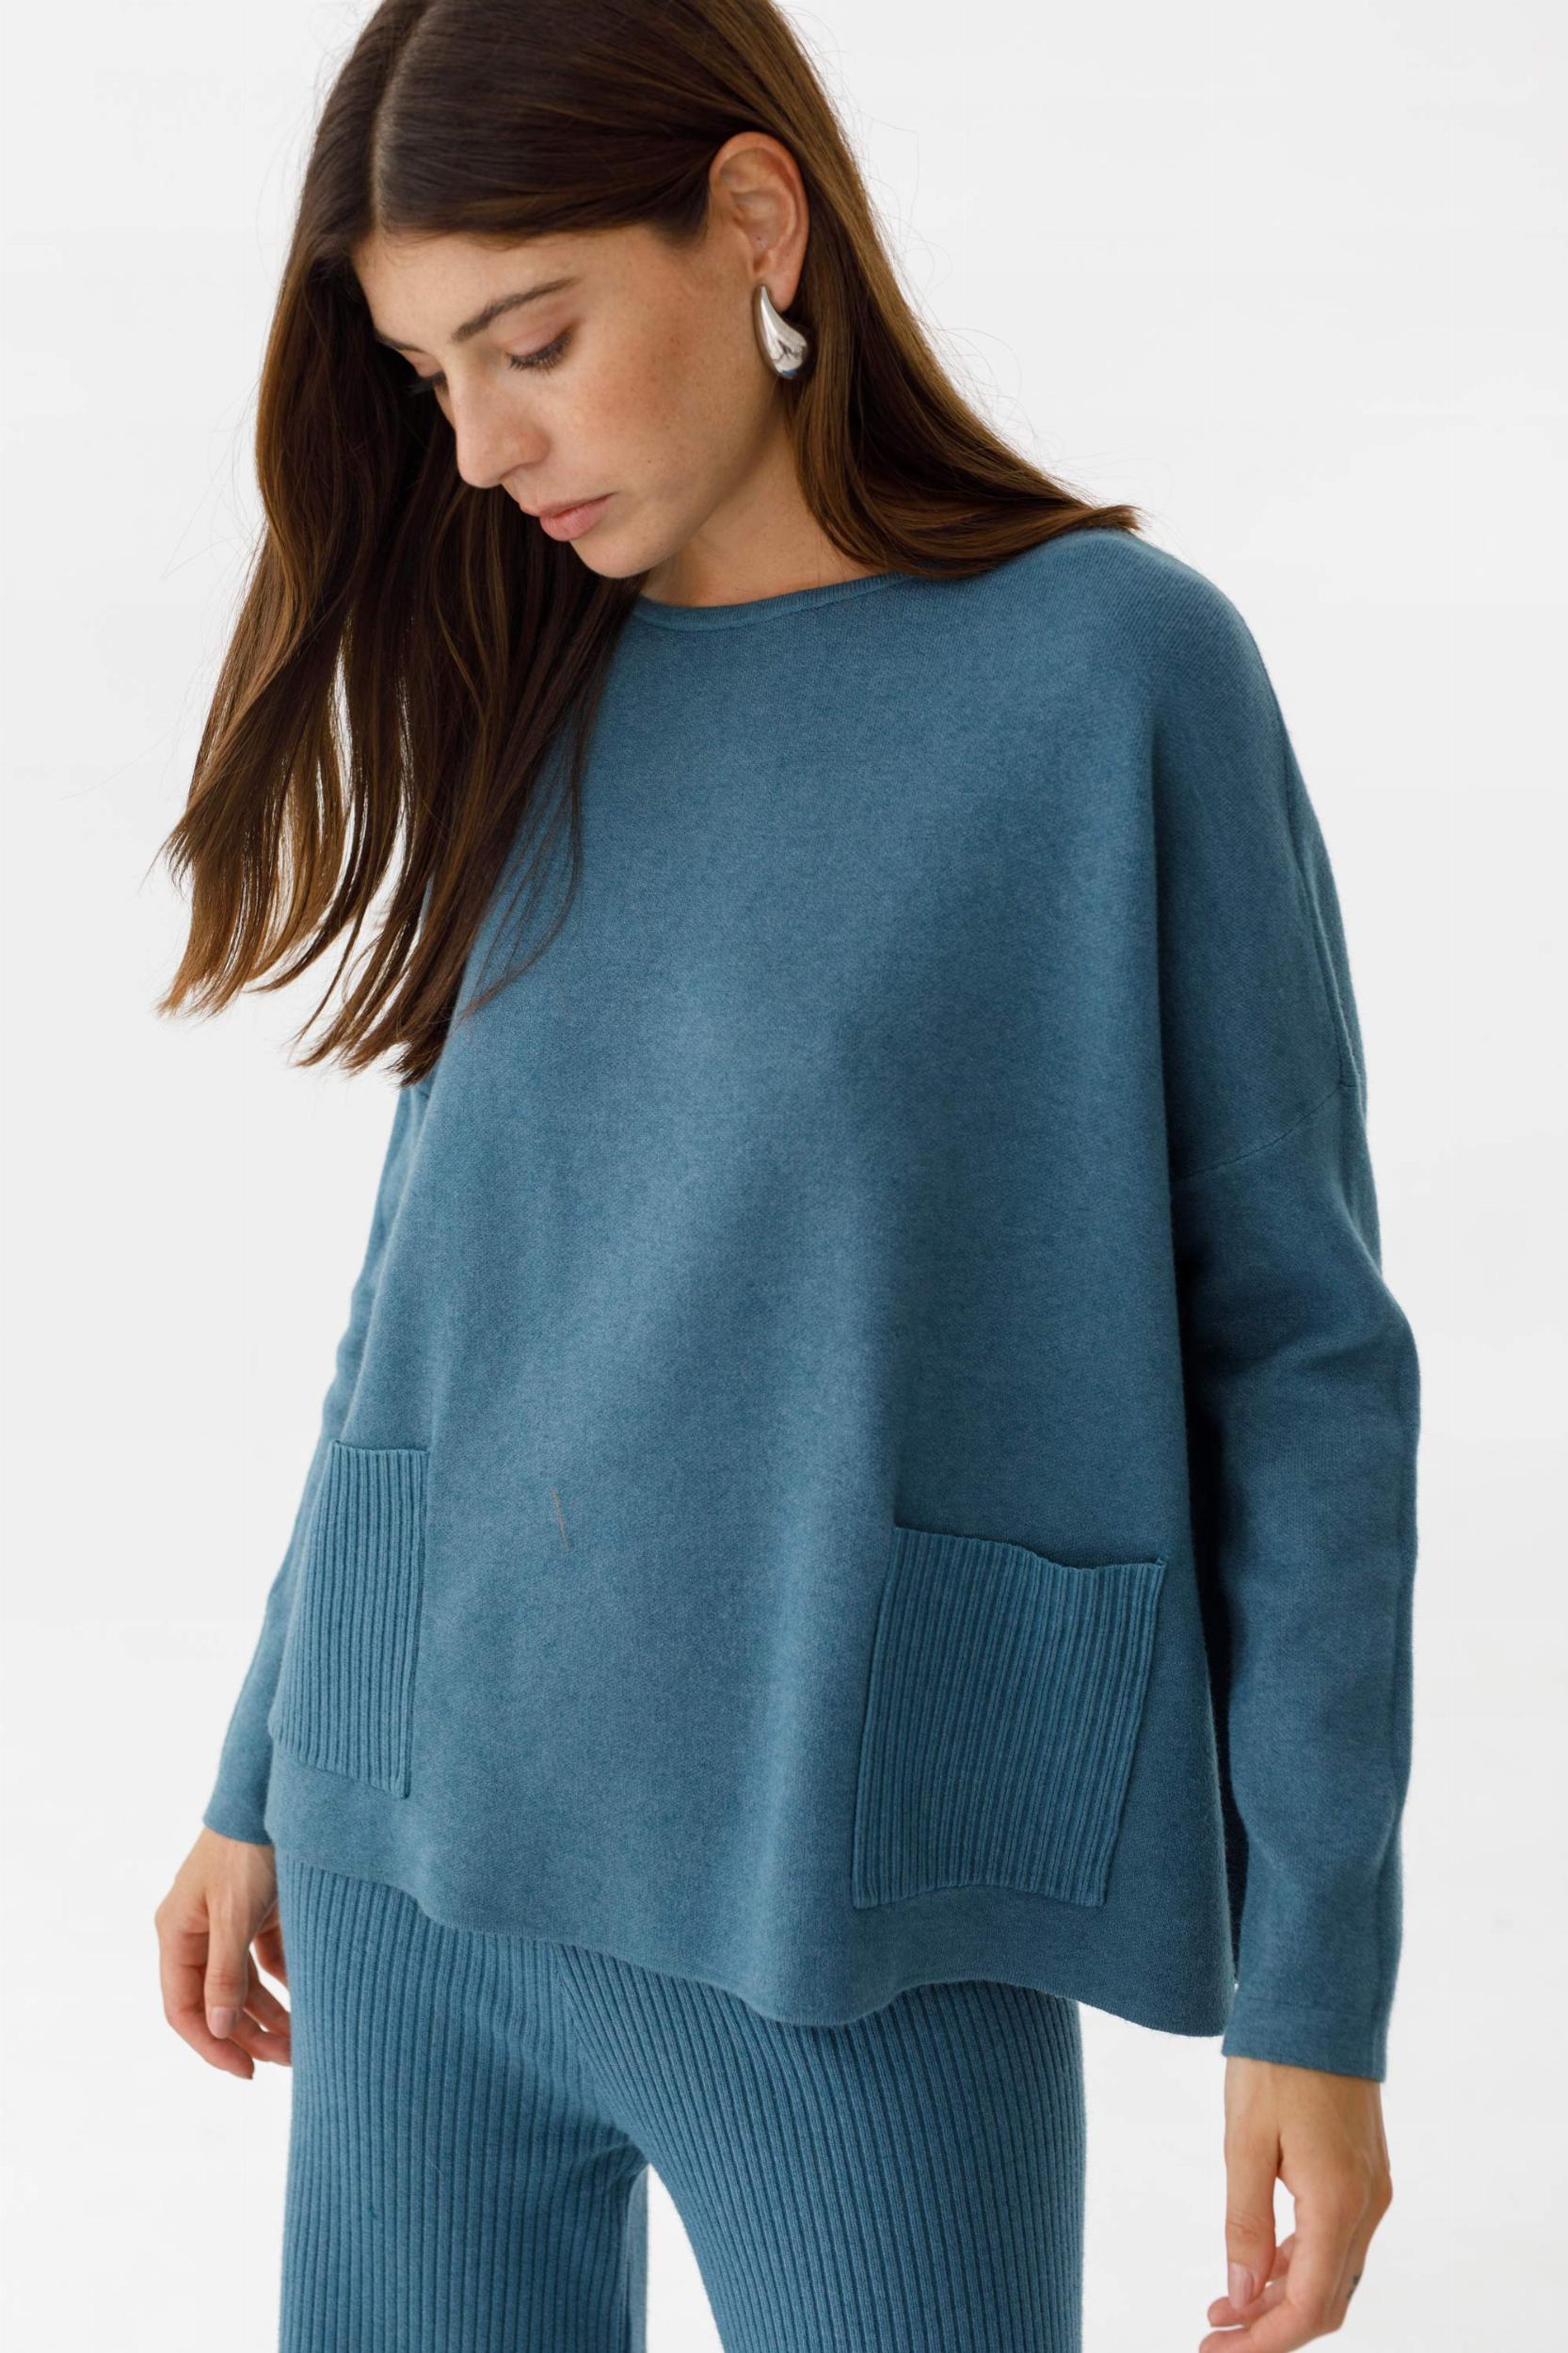 Sweater Manola azul piedra talle unico